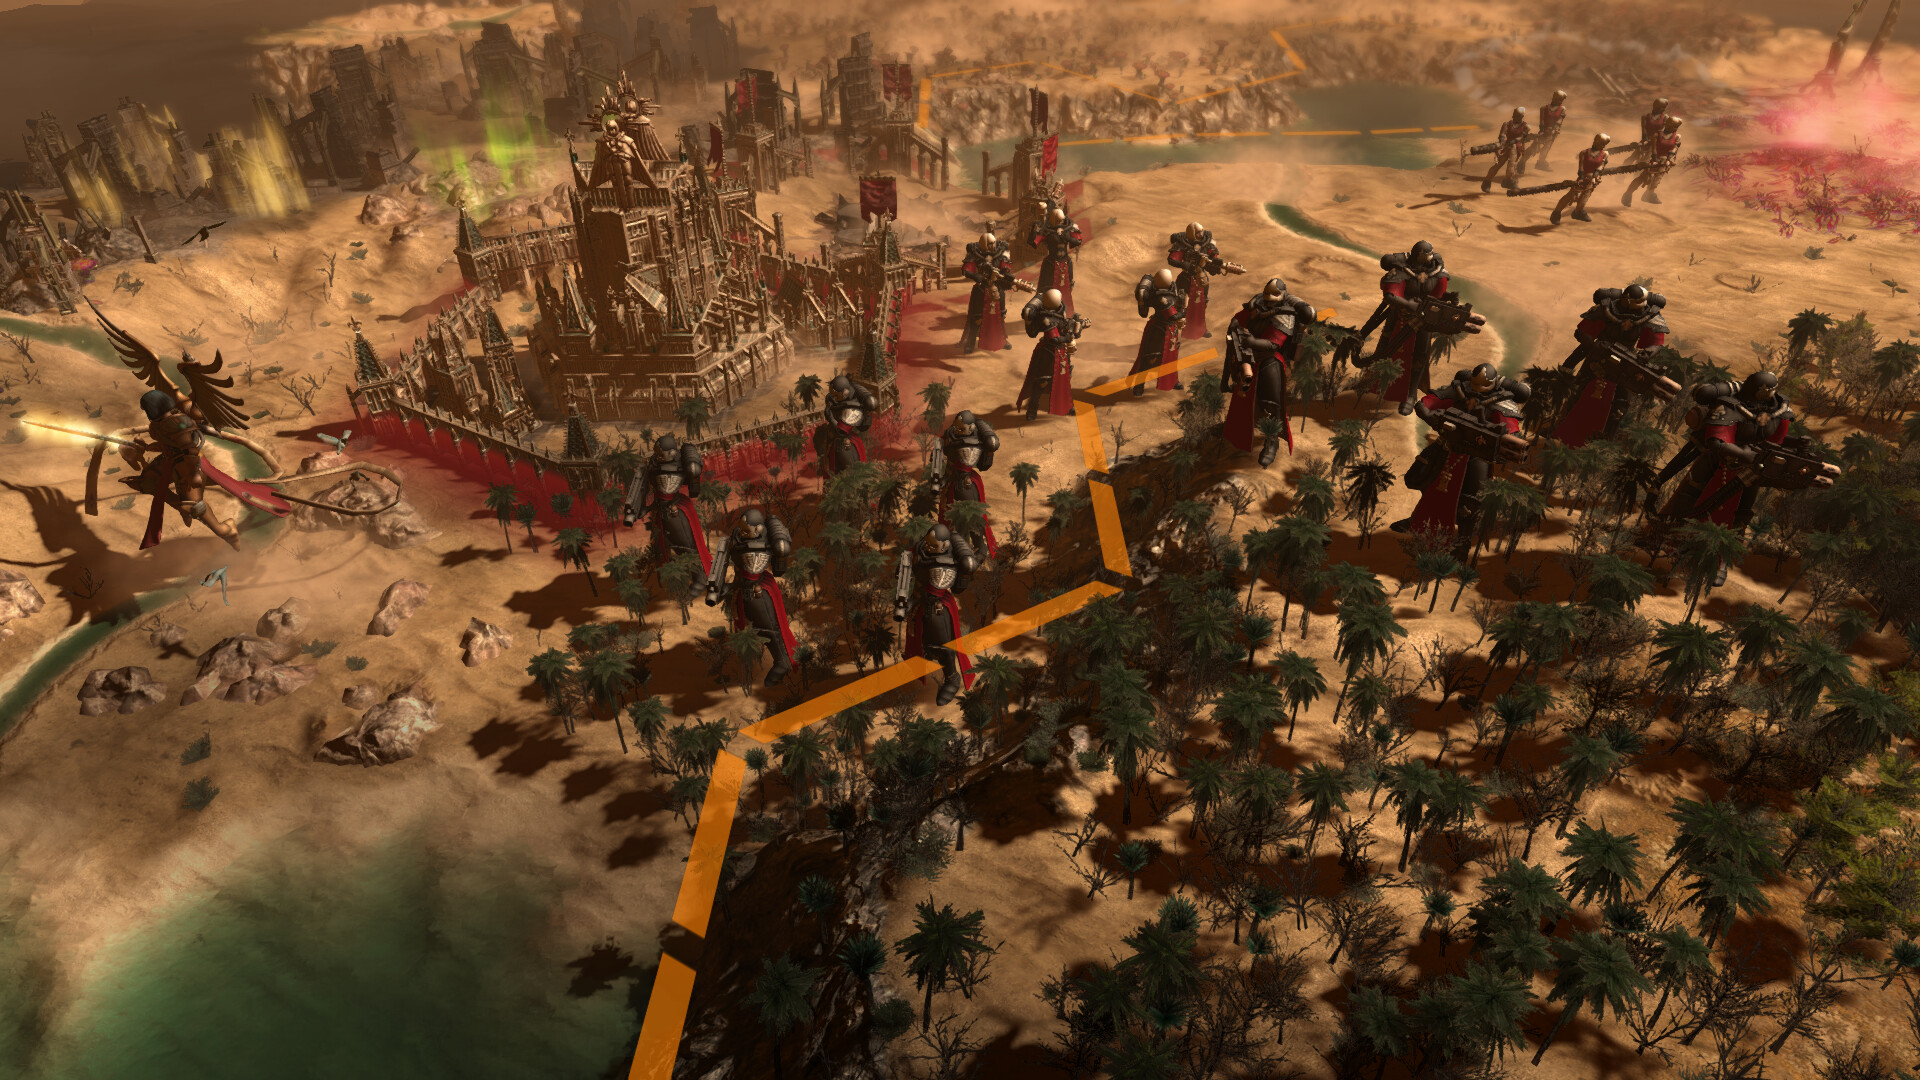 Warhammer 40,000: Gladius - Adepta Sororitas DLC Steam Altergift [USD 21.54]